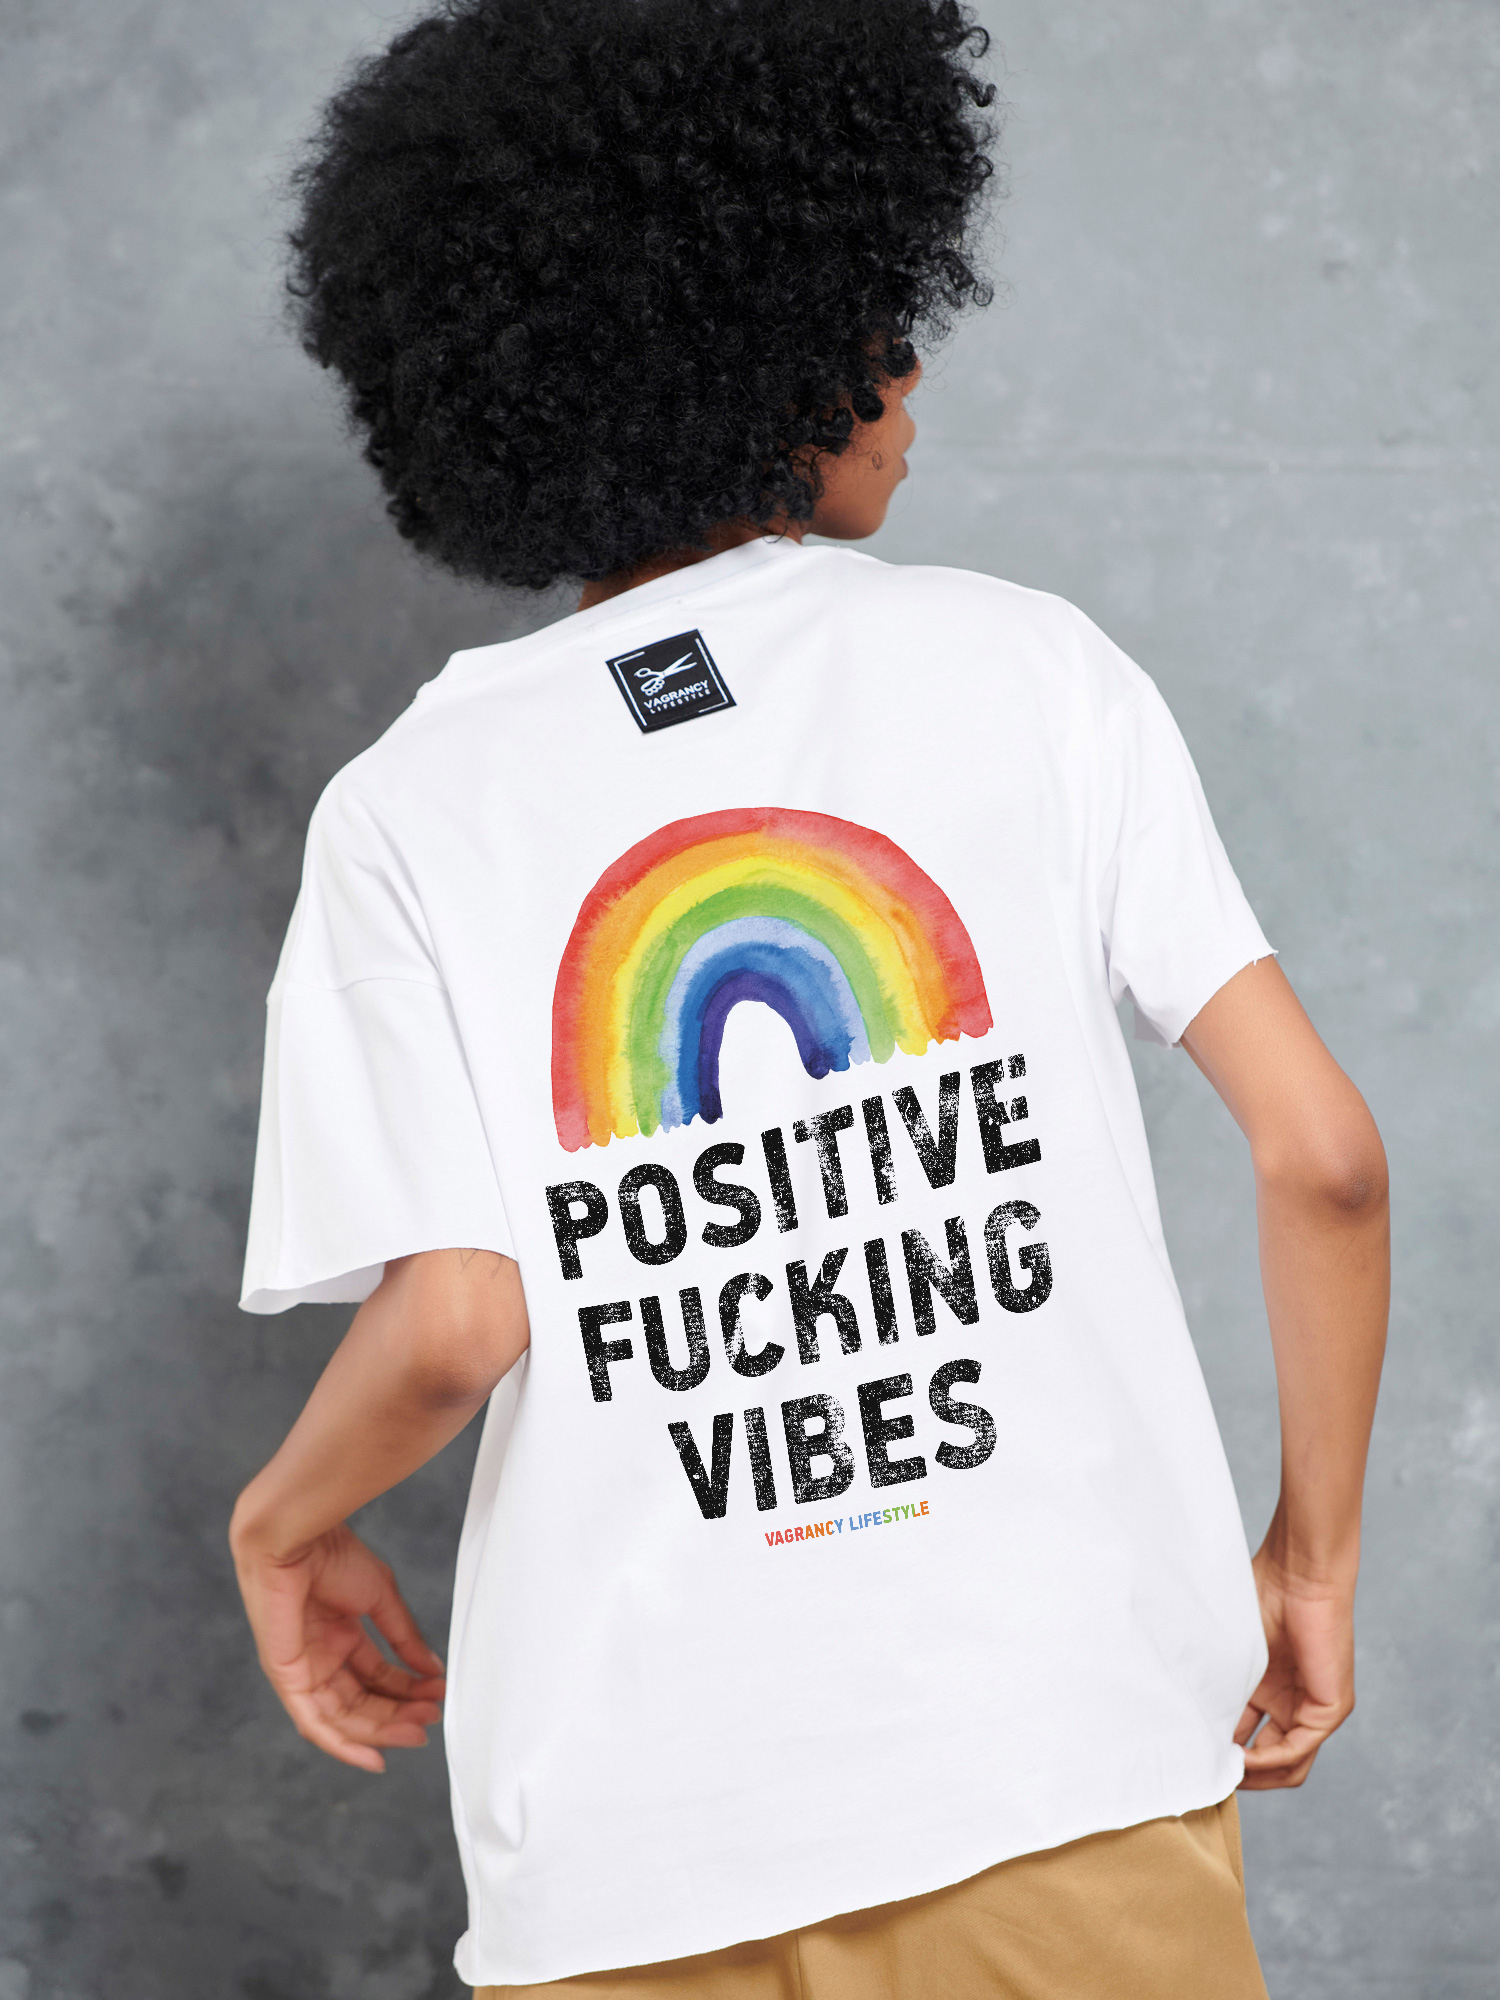 Positive vibes t-shirt